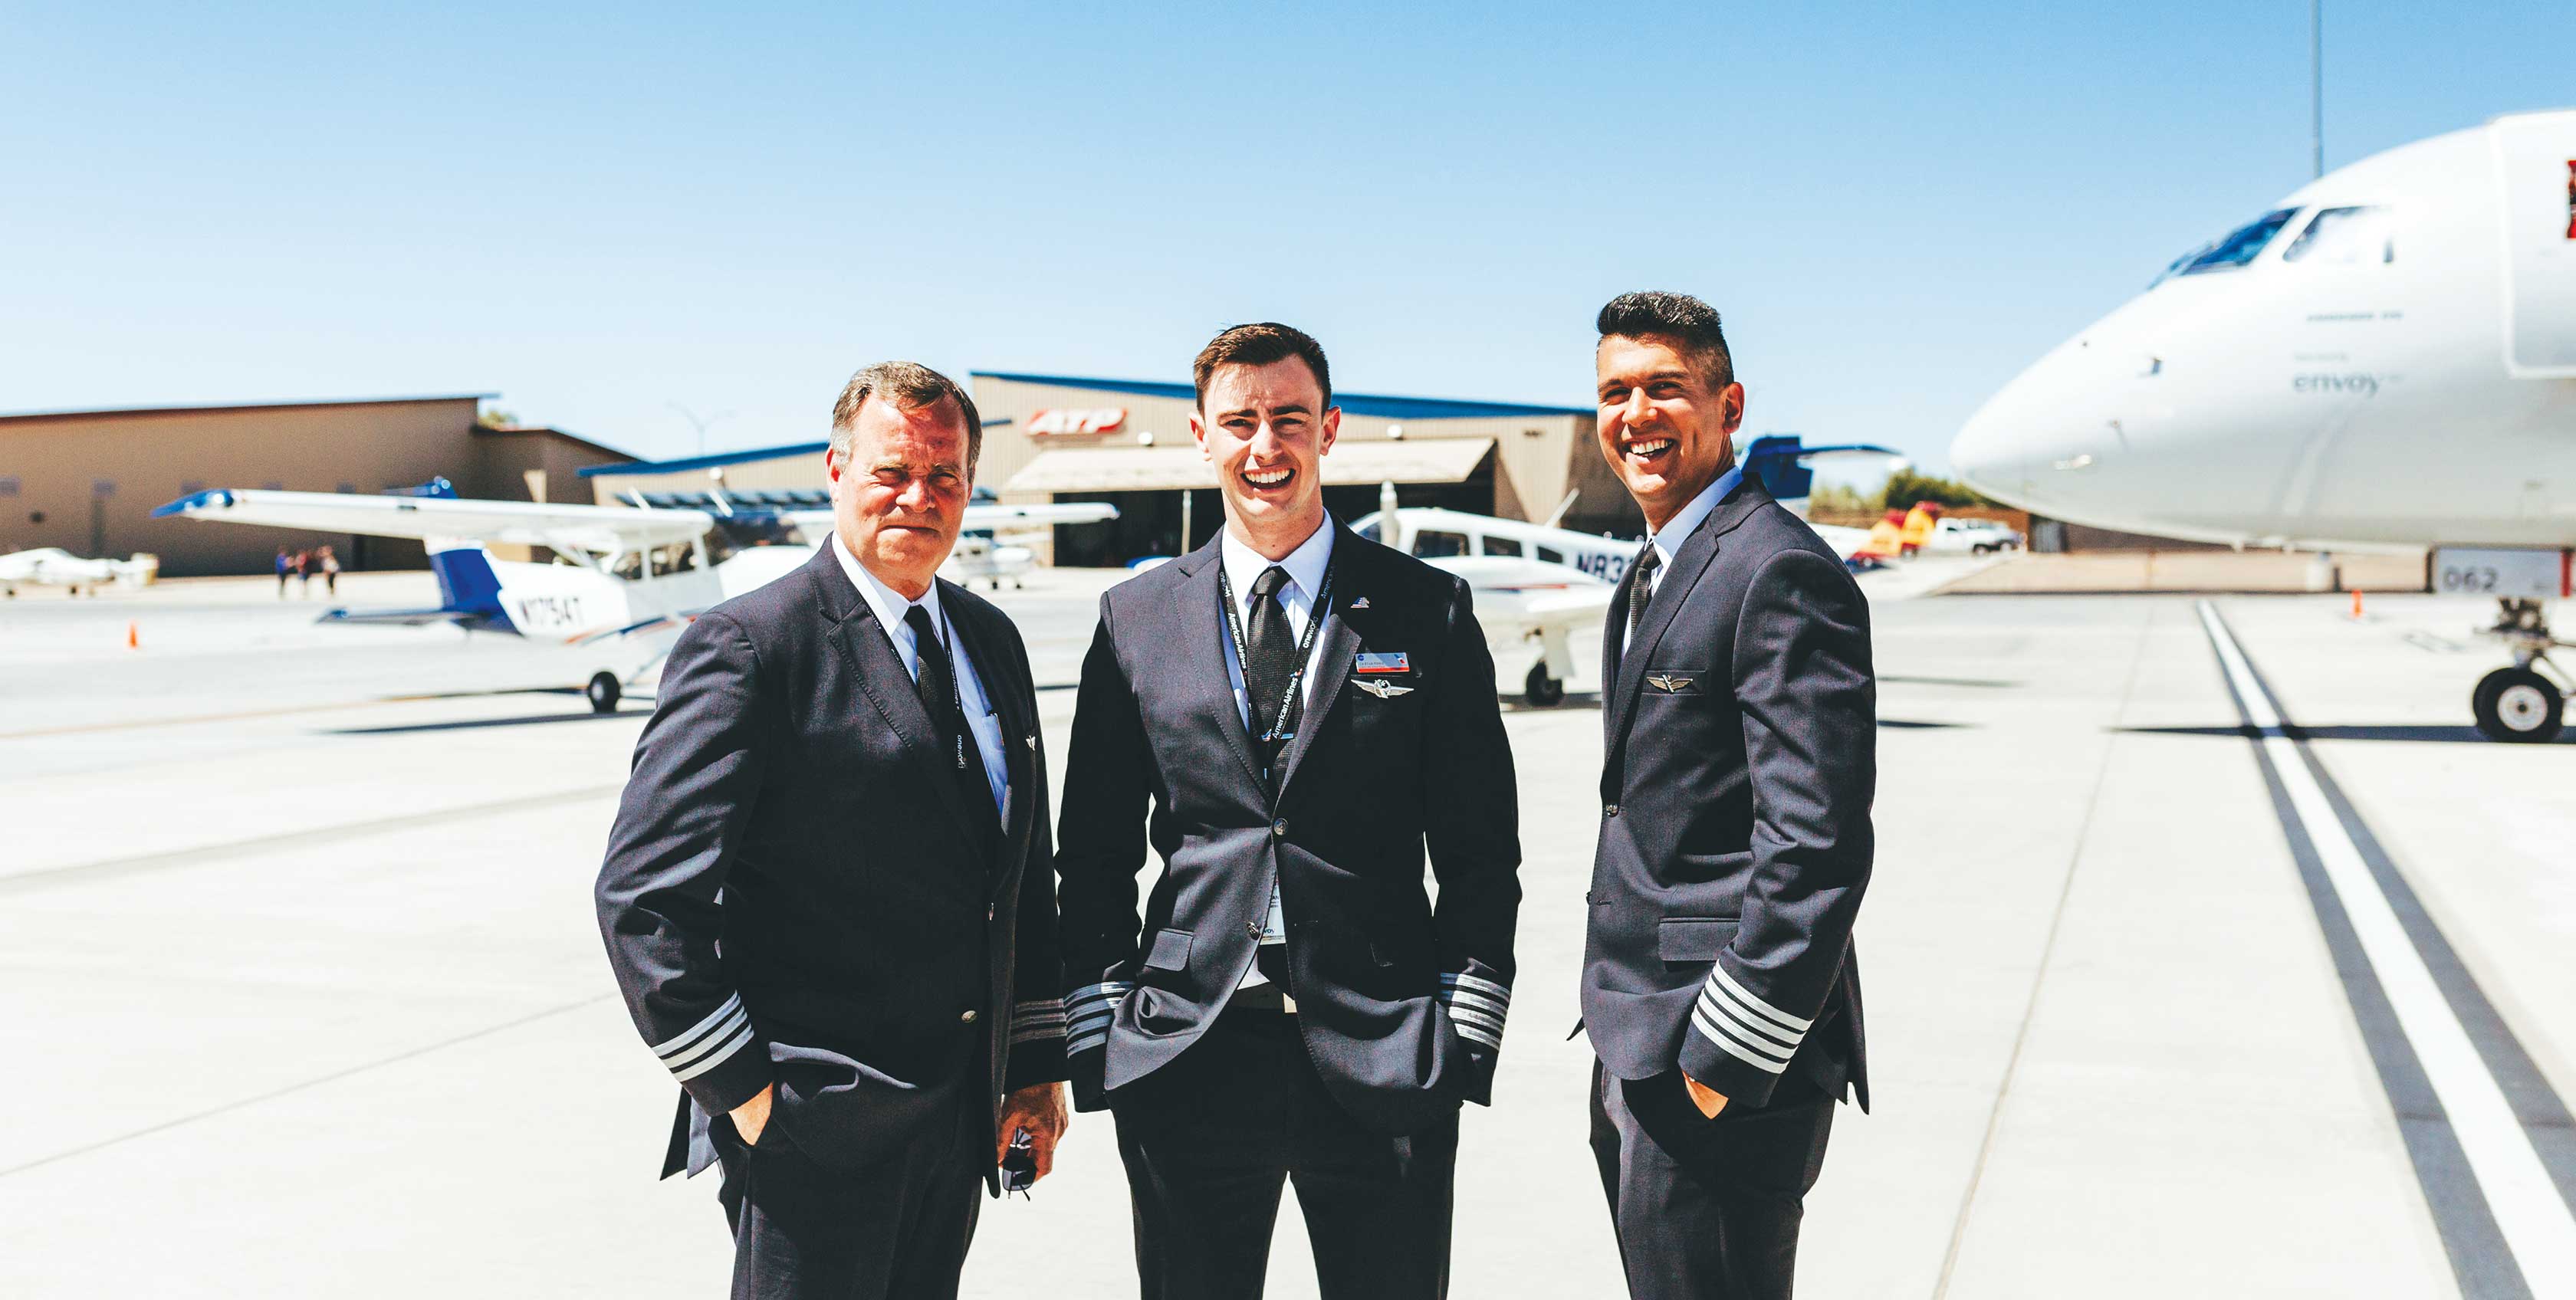 Pilot Career Services Atp Flight School